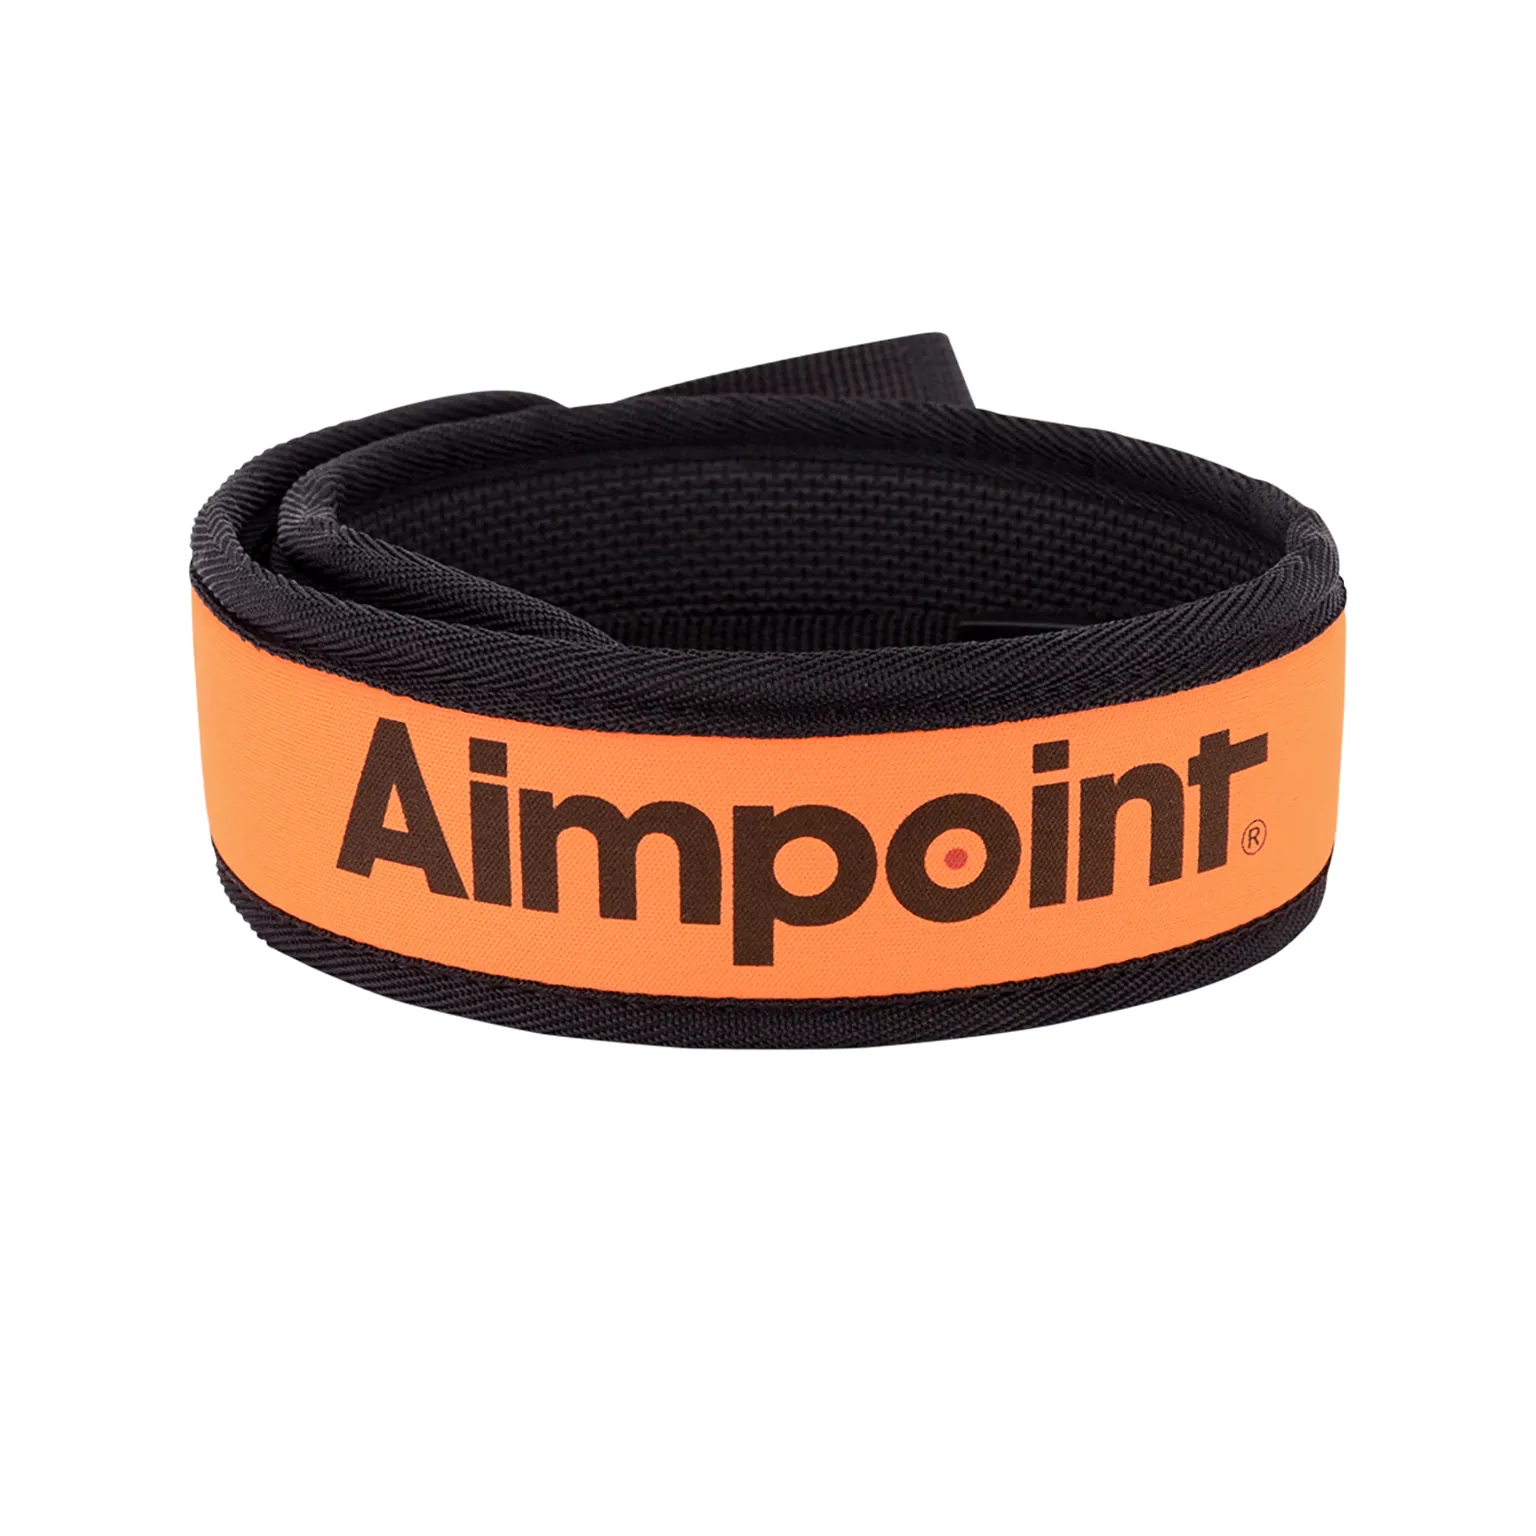 Aimpoint® Rifle sling Orange - Adjustable length  - 5